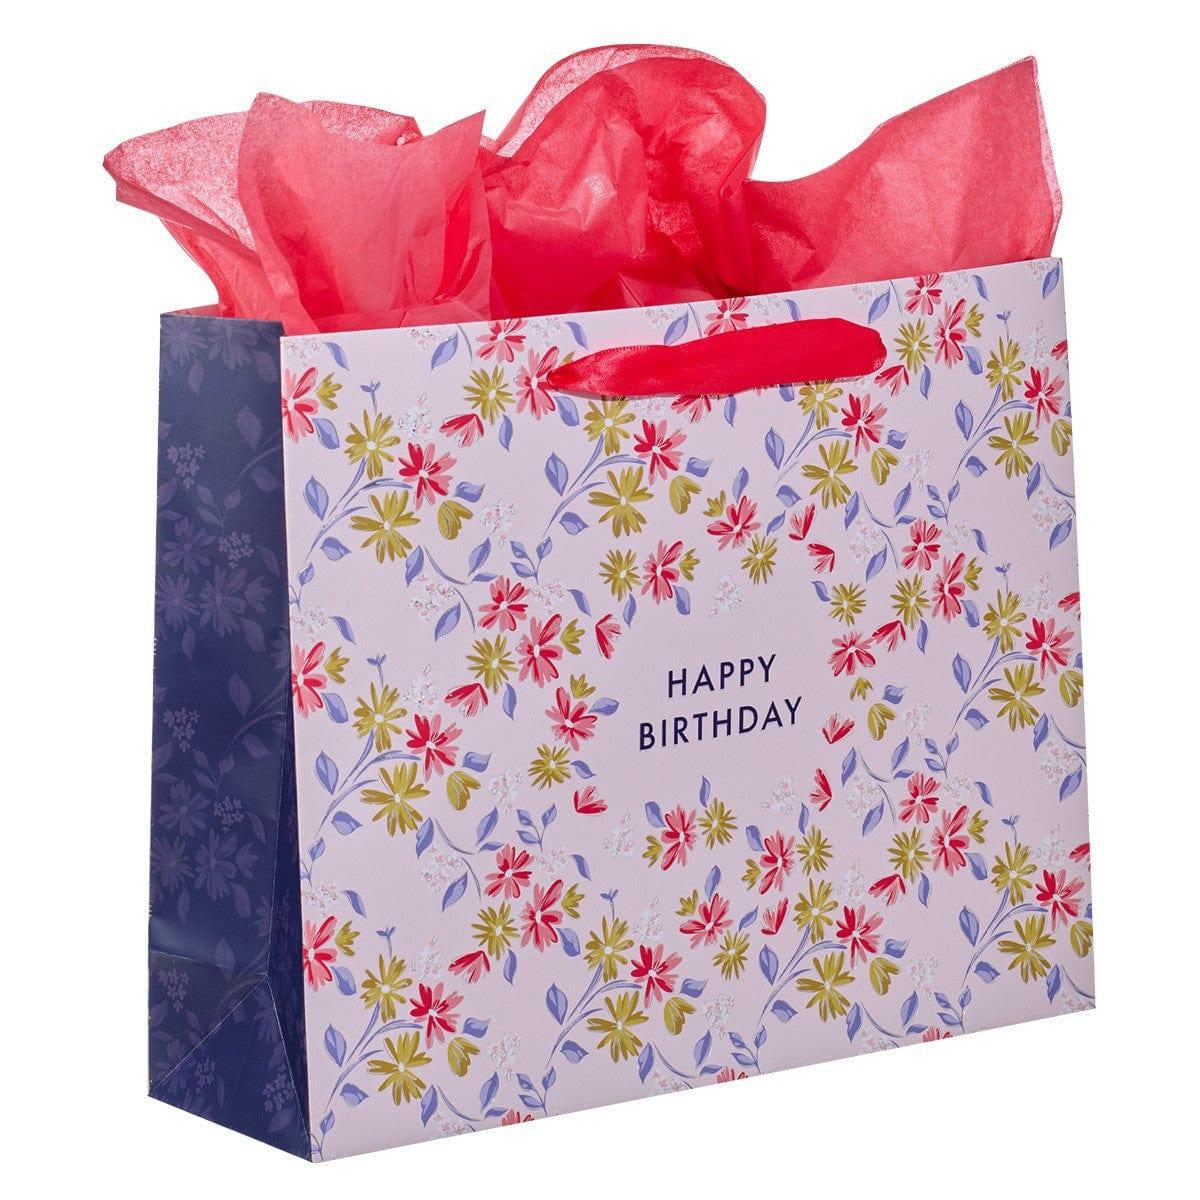 Happy Birthday Pink Flower Trellis Large Landscape Gift Bag Set with Card - Pura Vida Books